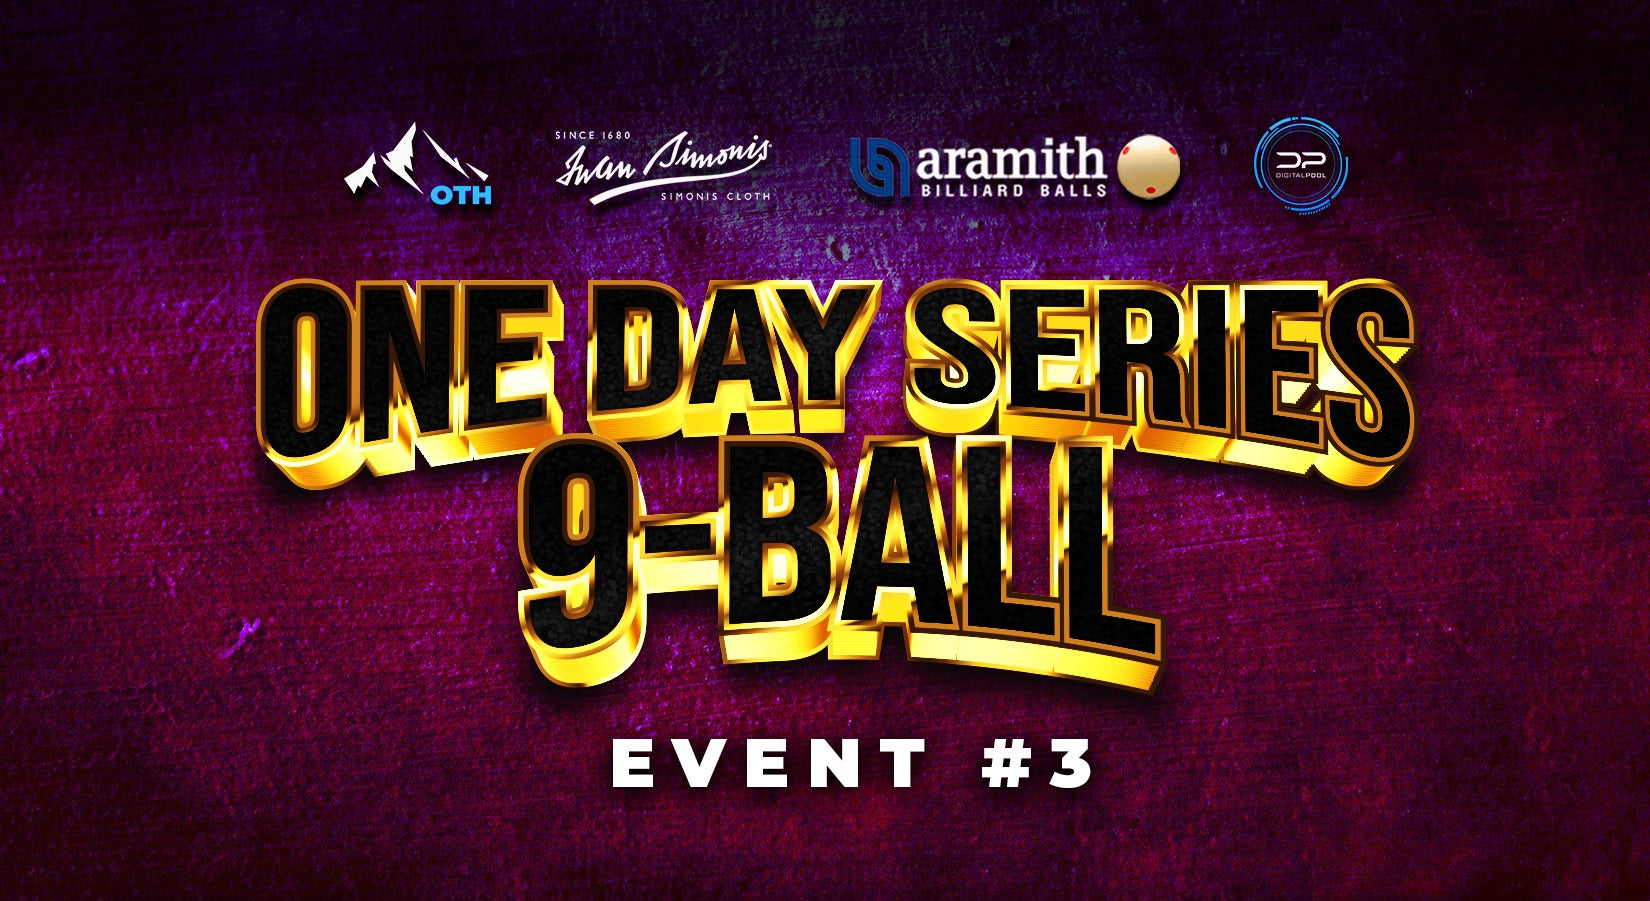 Jun 8 - One Day Open 9-Ball Series Event #3